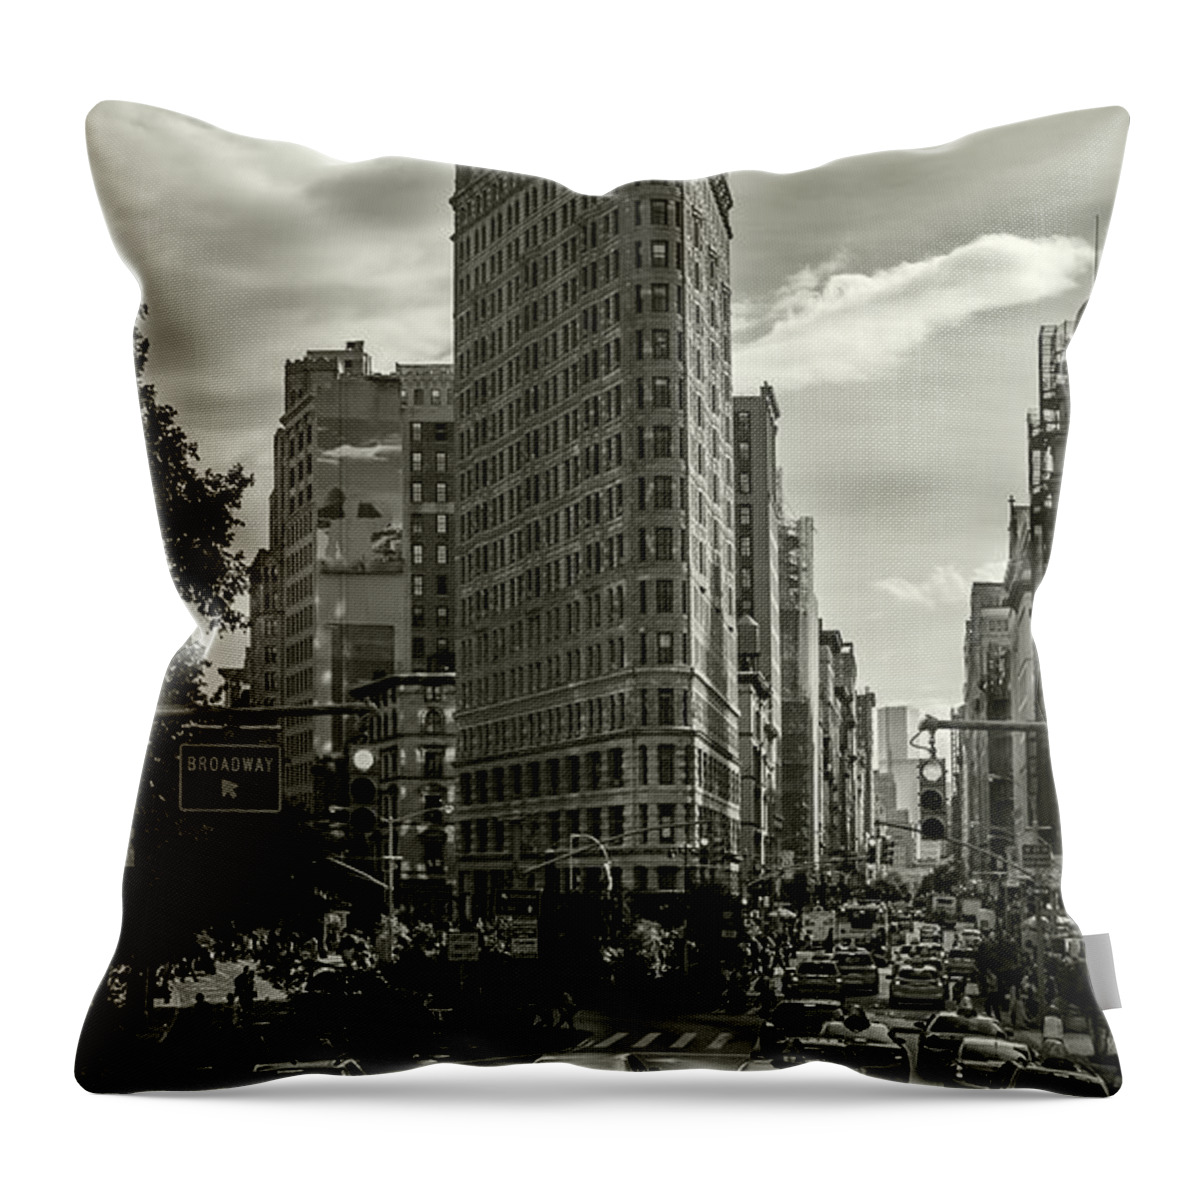 Flatiron Building Throw Pillow featuring the photograph Flatiron Building - Black and White by Jatin Thakkar